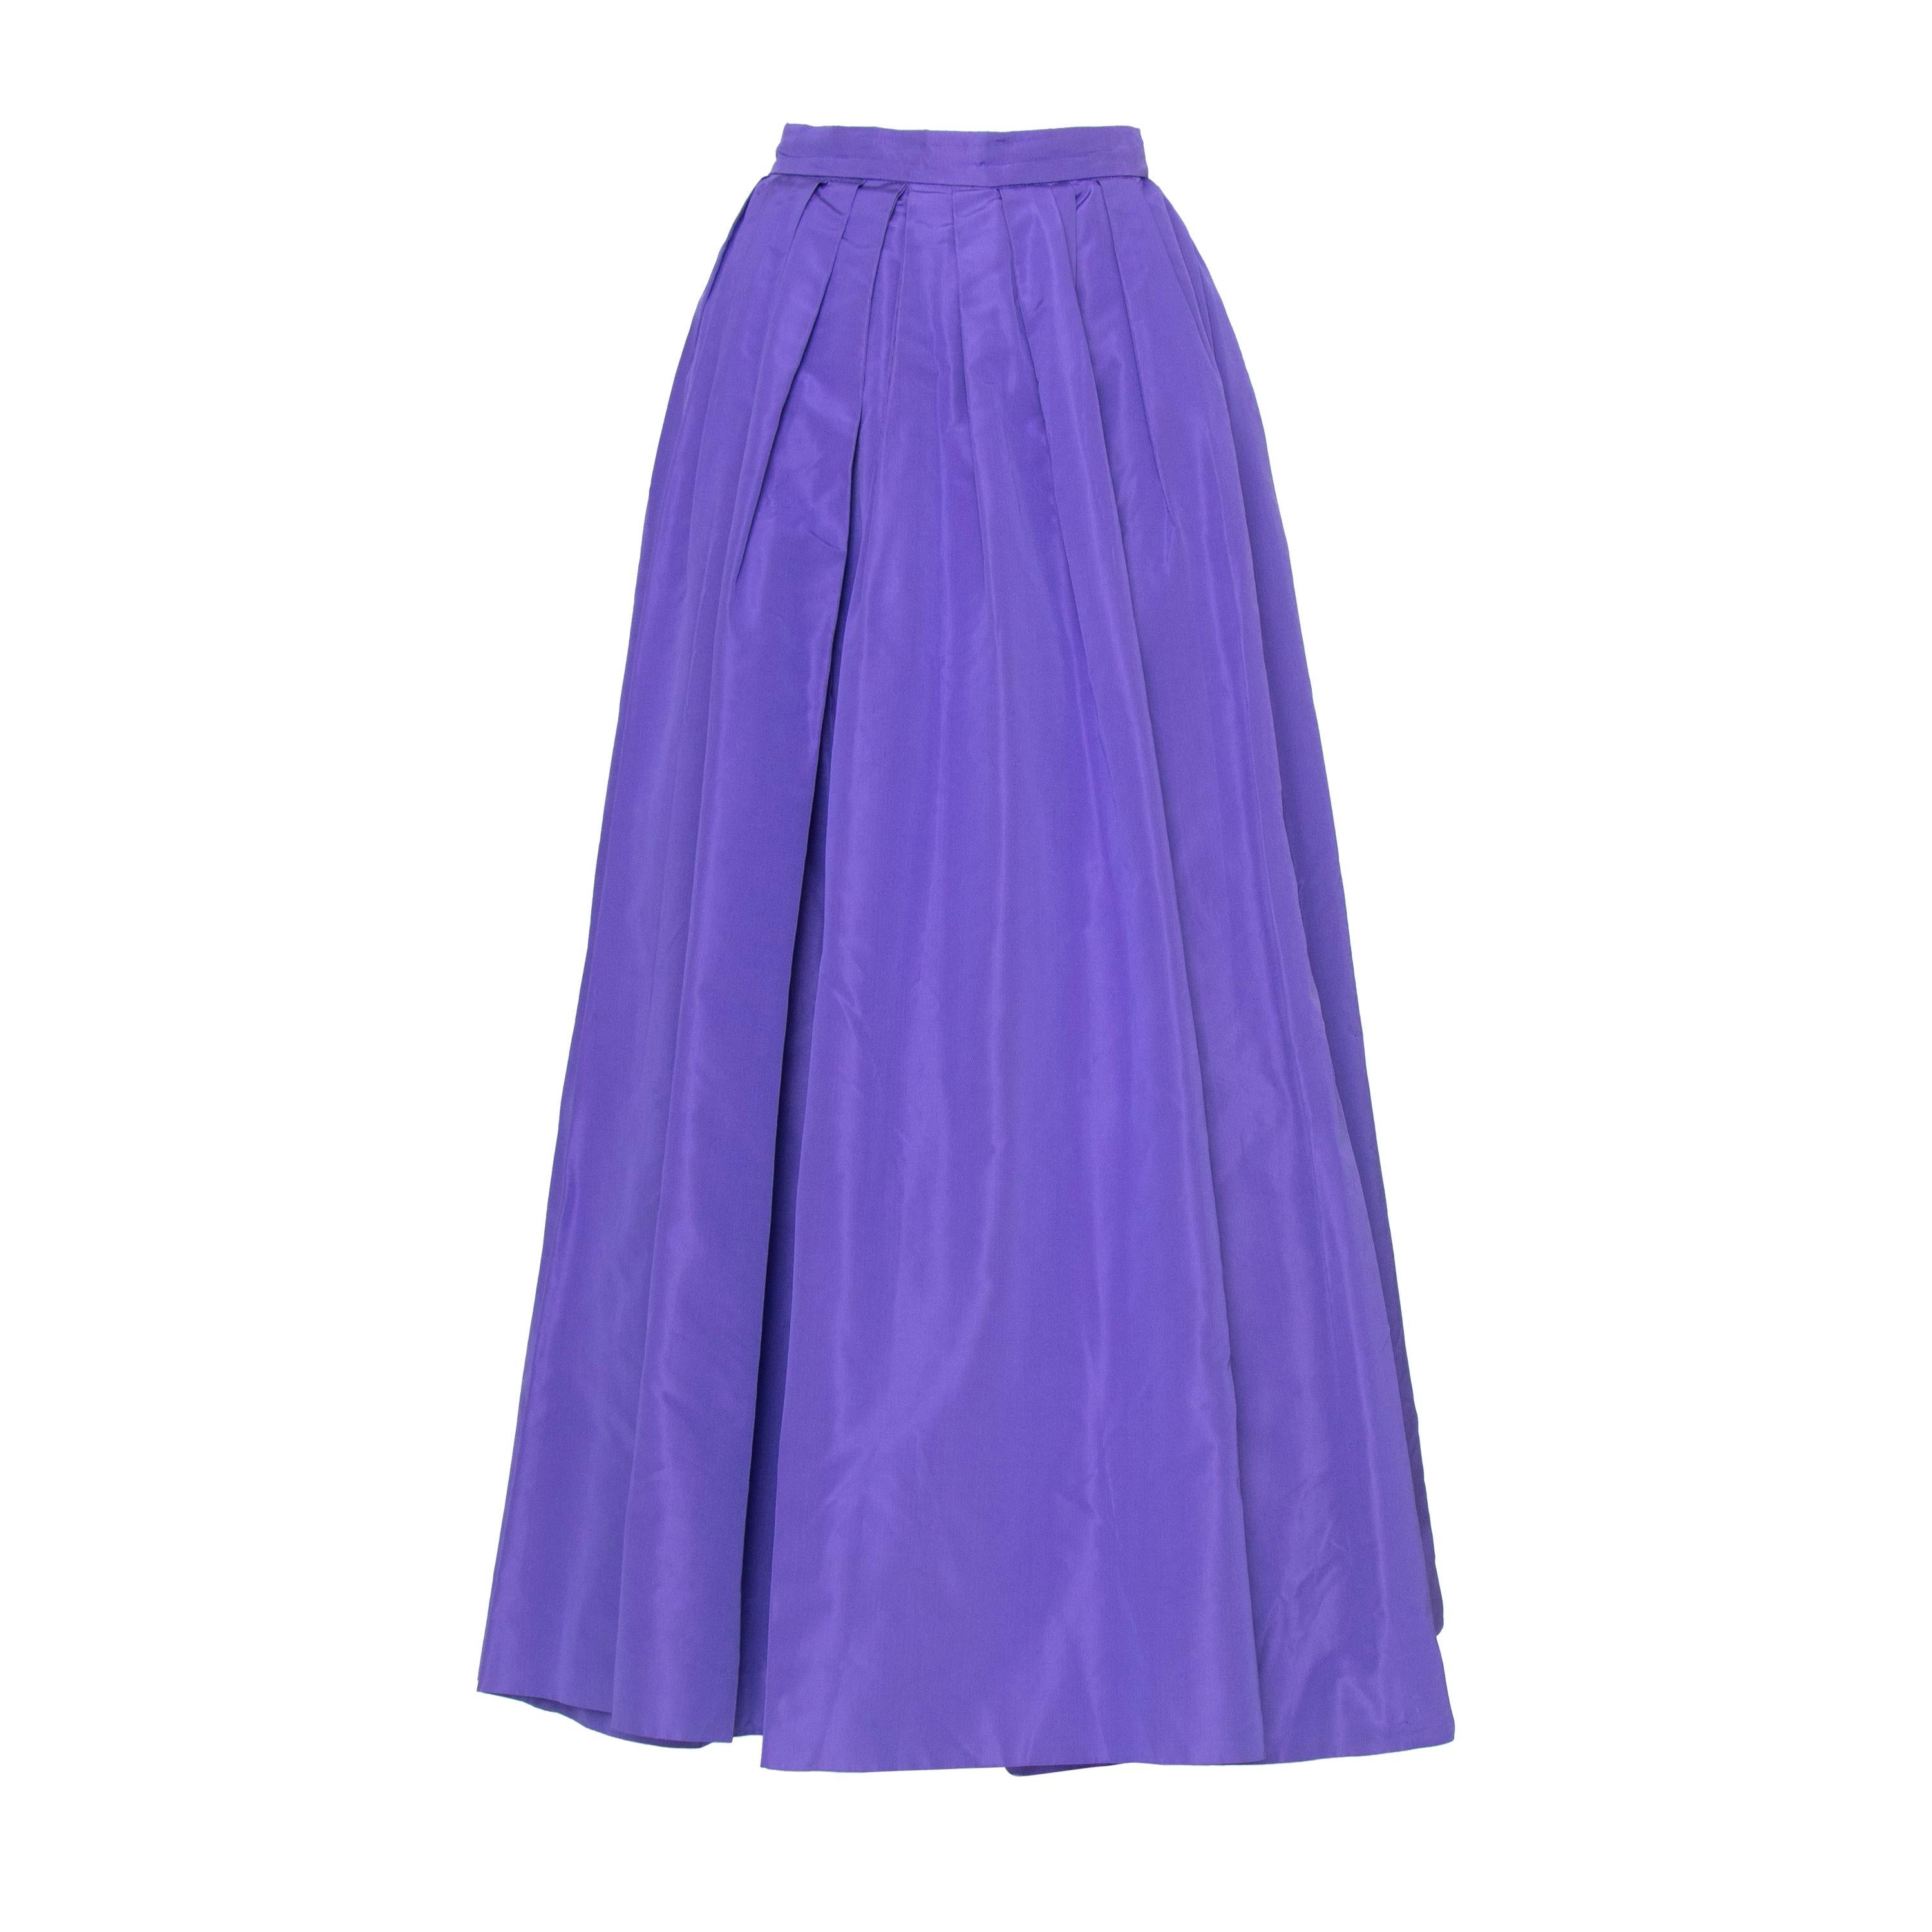 A 1980s Vintage Yves Saint Laurent Rive Gauche Purple Silk Taffeta Skirt 